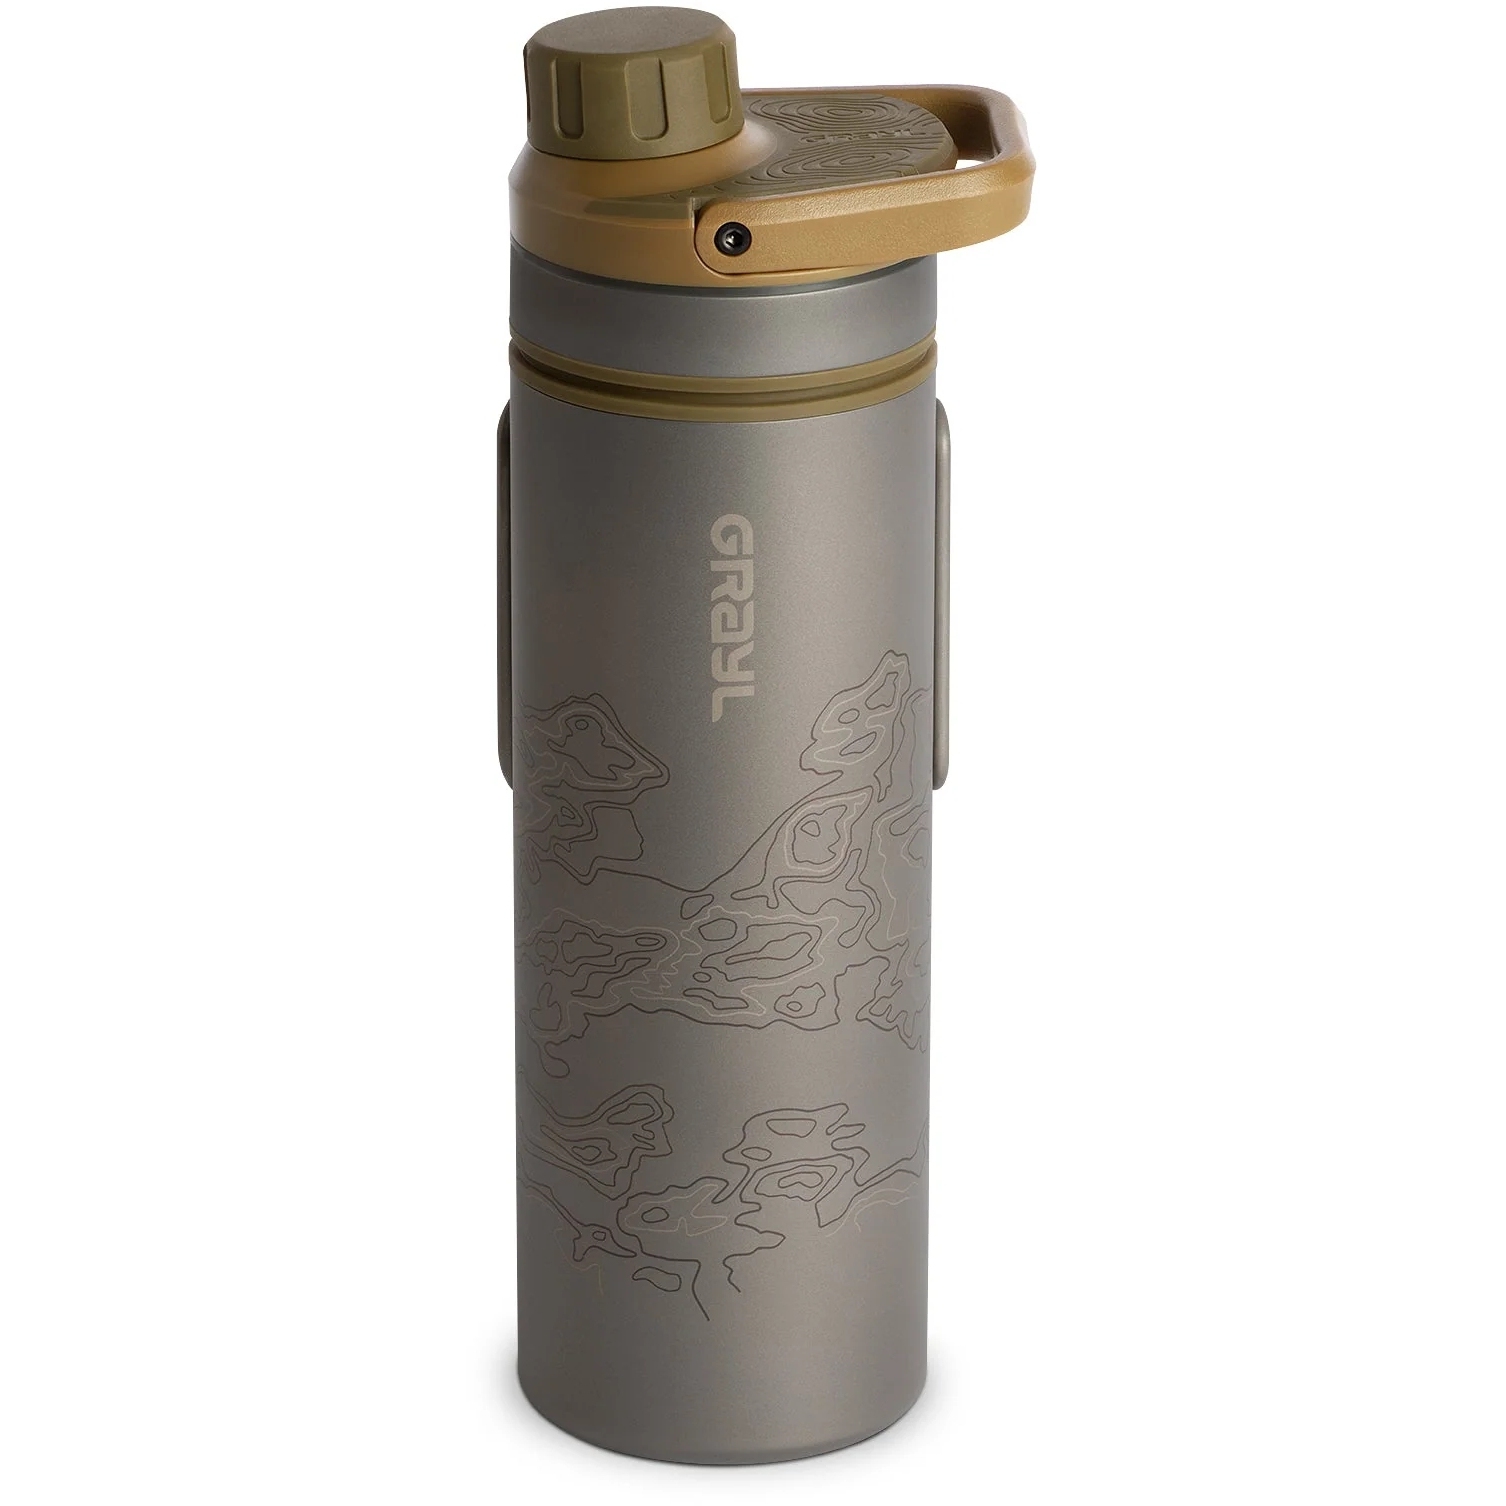 Productfoto van Grayl UltraPress Purifier Titanium Fles met Waterfilter - 500ml - Coyote Brown